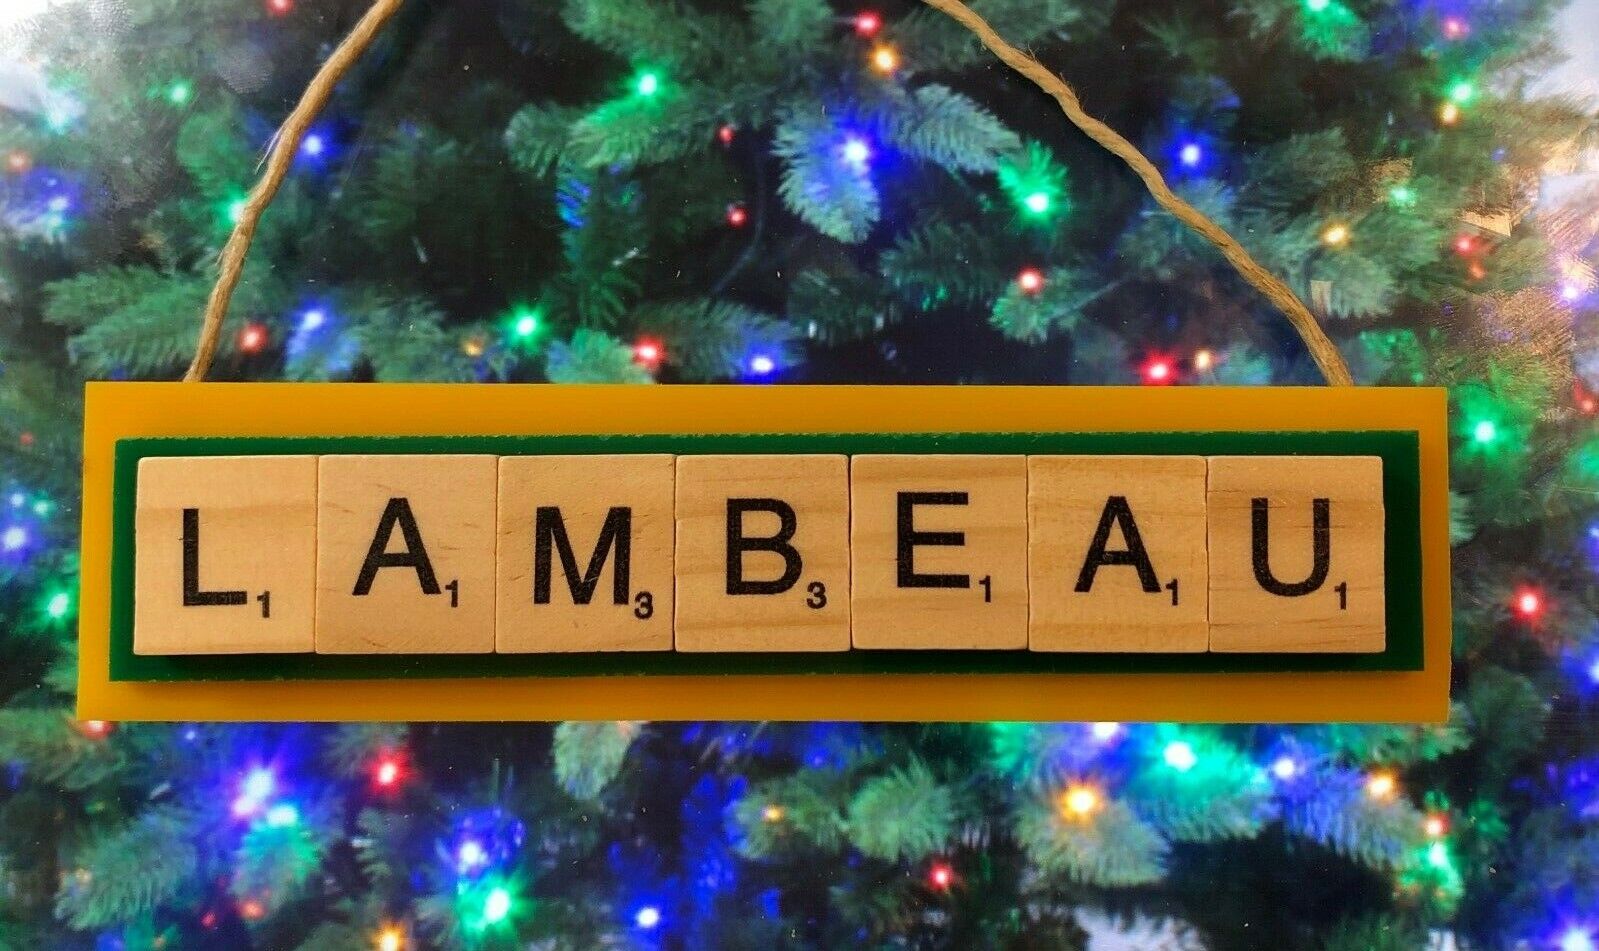 Lambeau Field Green Bay Packers Frozen Tundra Christmas Ornament Scrabble Tiles